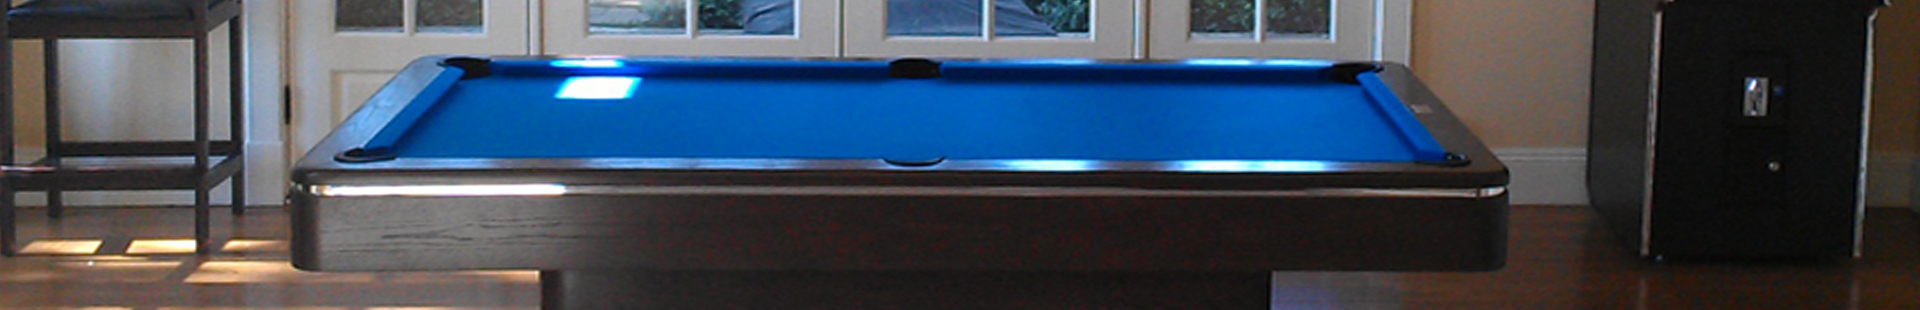 Challenger Pool Table